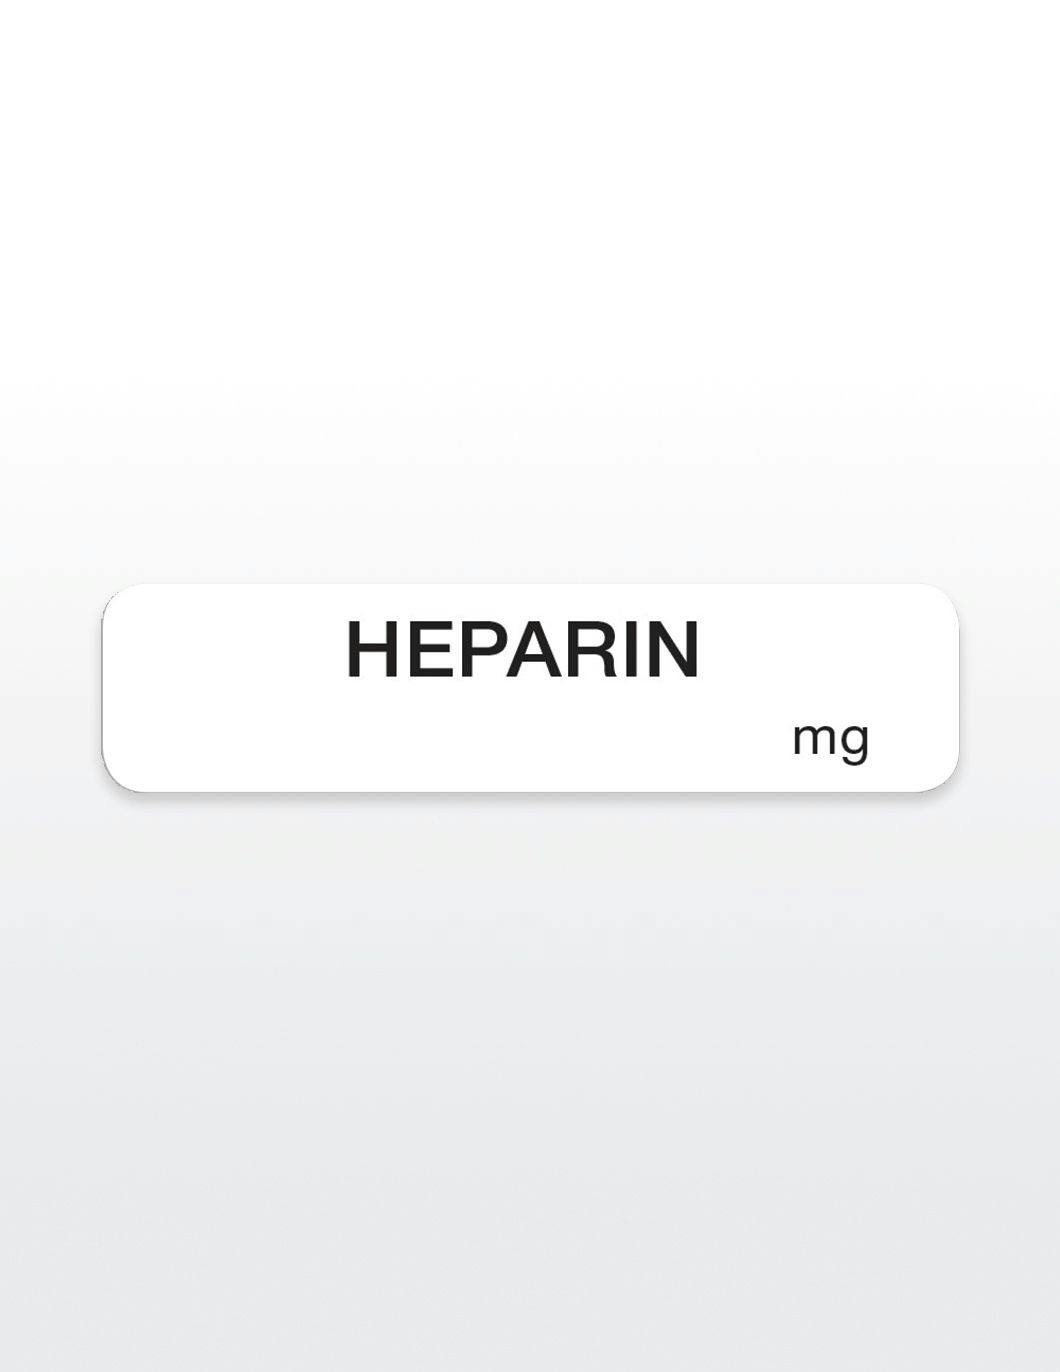 heparin-drug-syringe-stickers